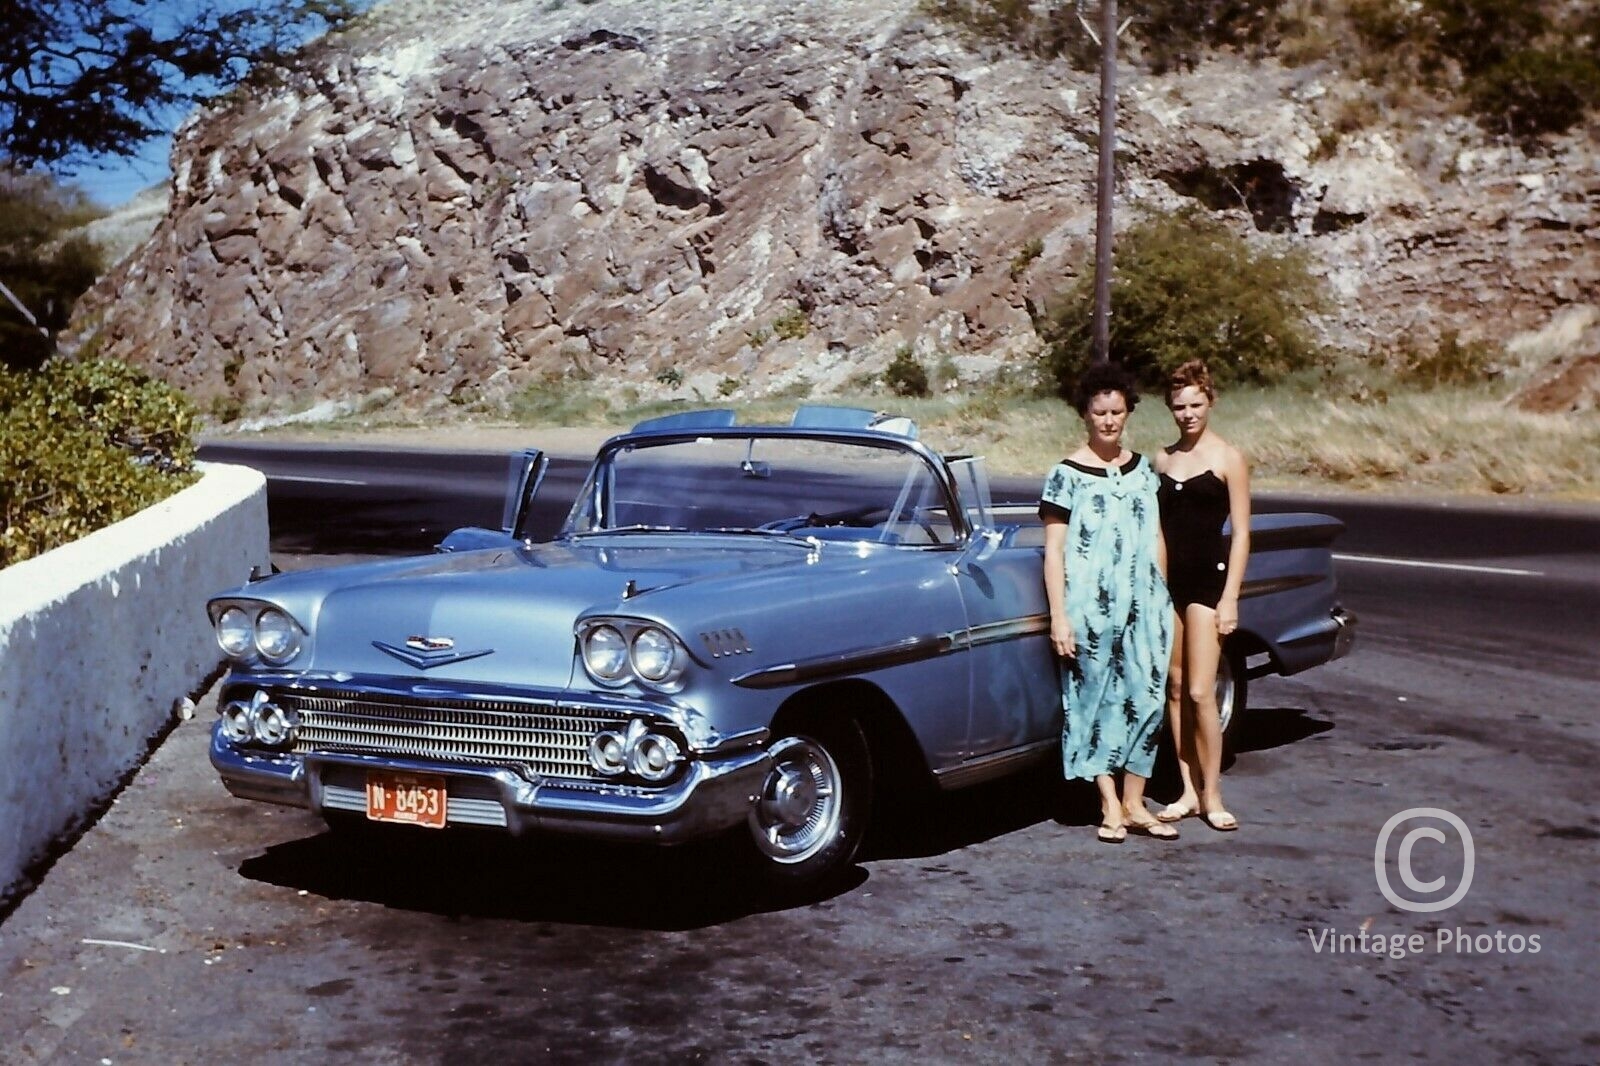 1959 American Clasic Convertible Automobile & 2 Women